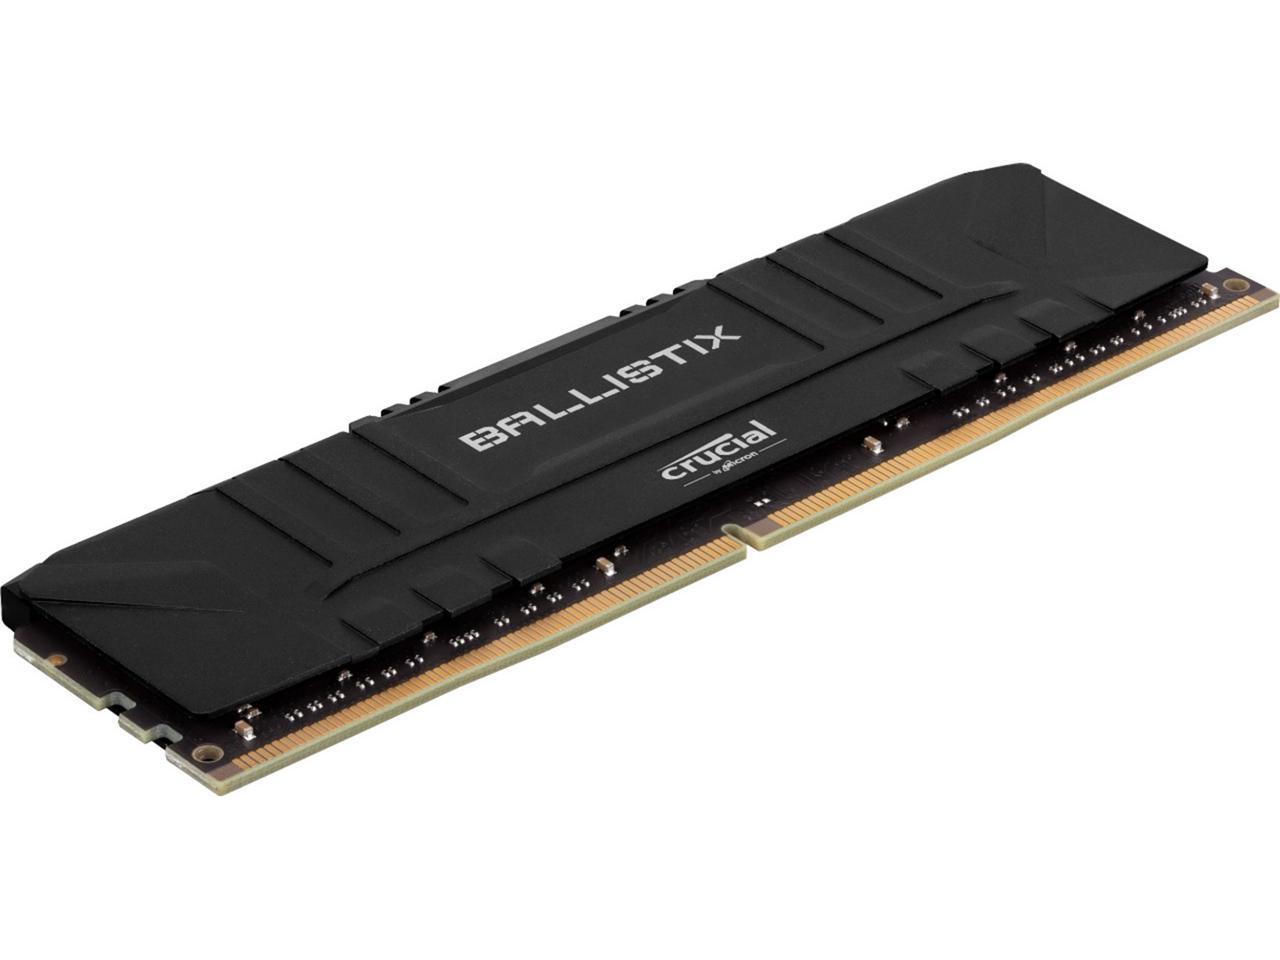 Crucial Ballistix 8GB (2 x 4GB) 288-Pin DDR4 SDRAM DDR4 2400 (PC4 19200) Desktop Memory Model BL2K4G24C16U4B